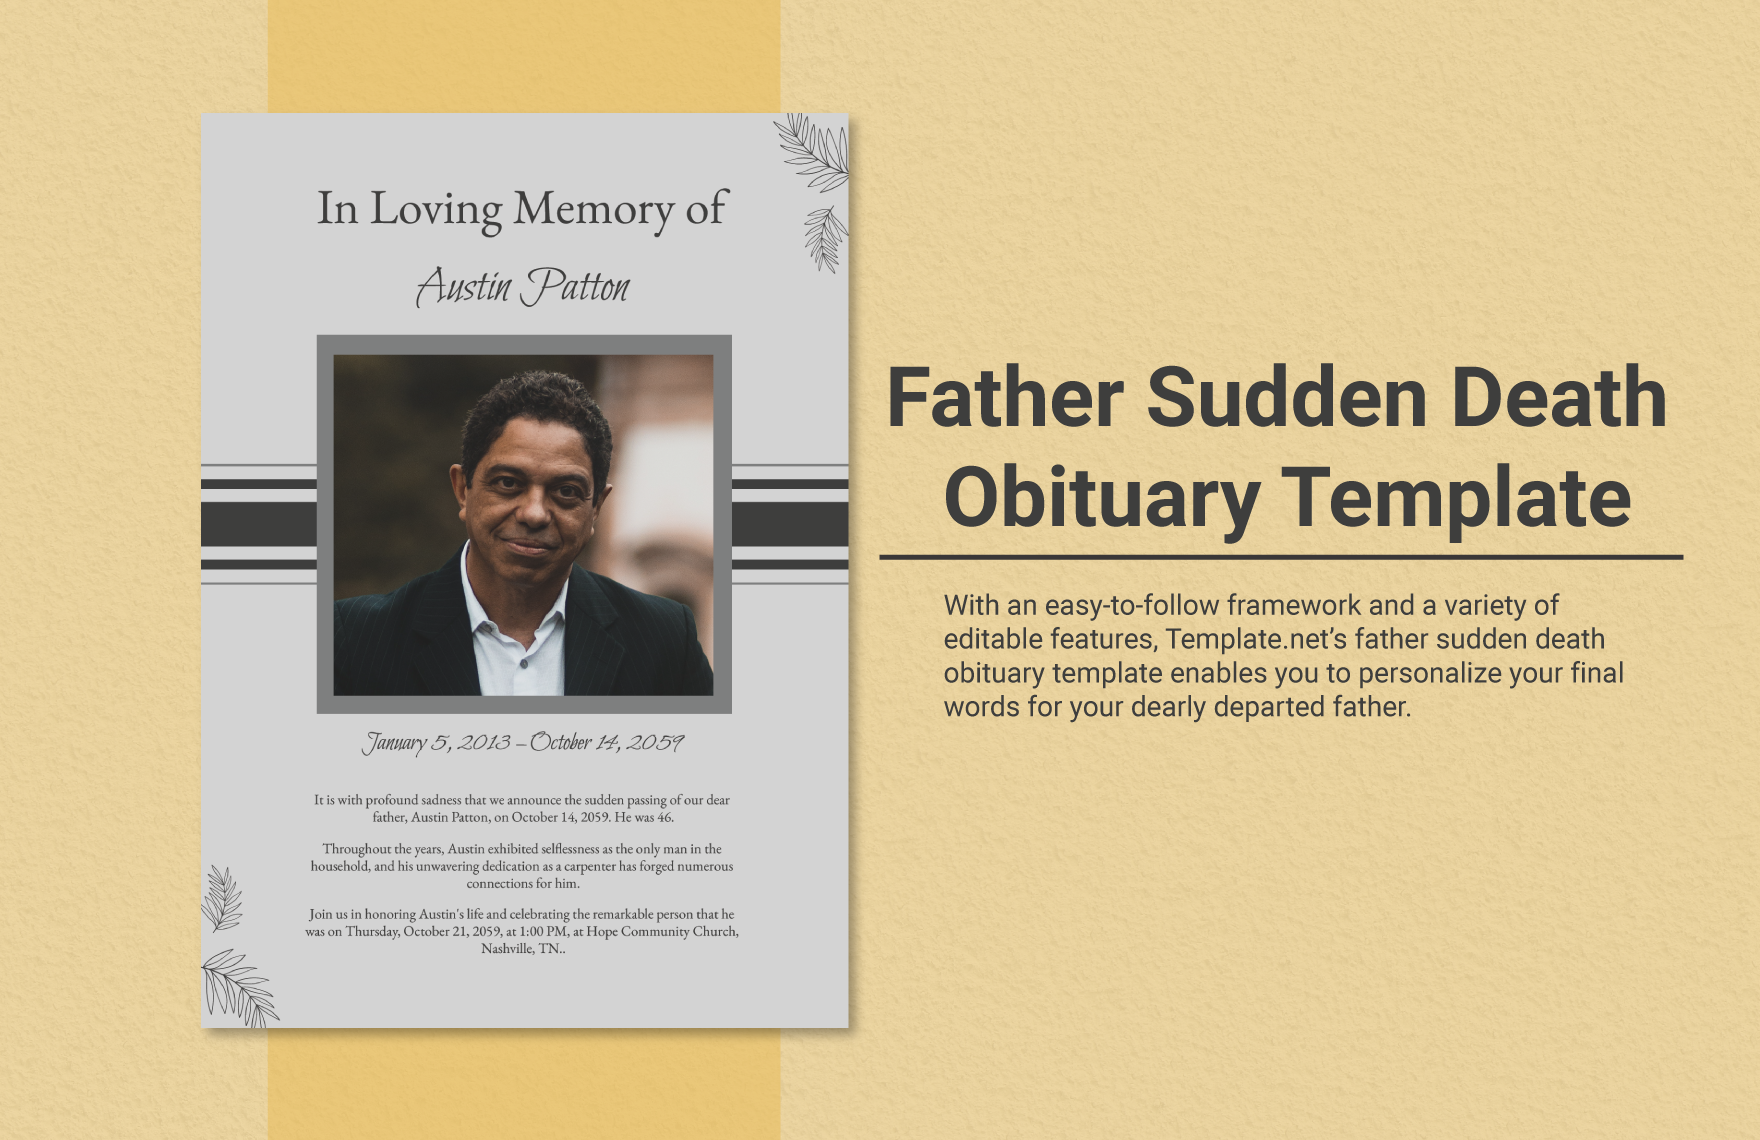 Father Sudden Death Obituary Template